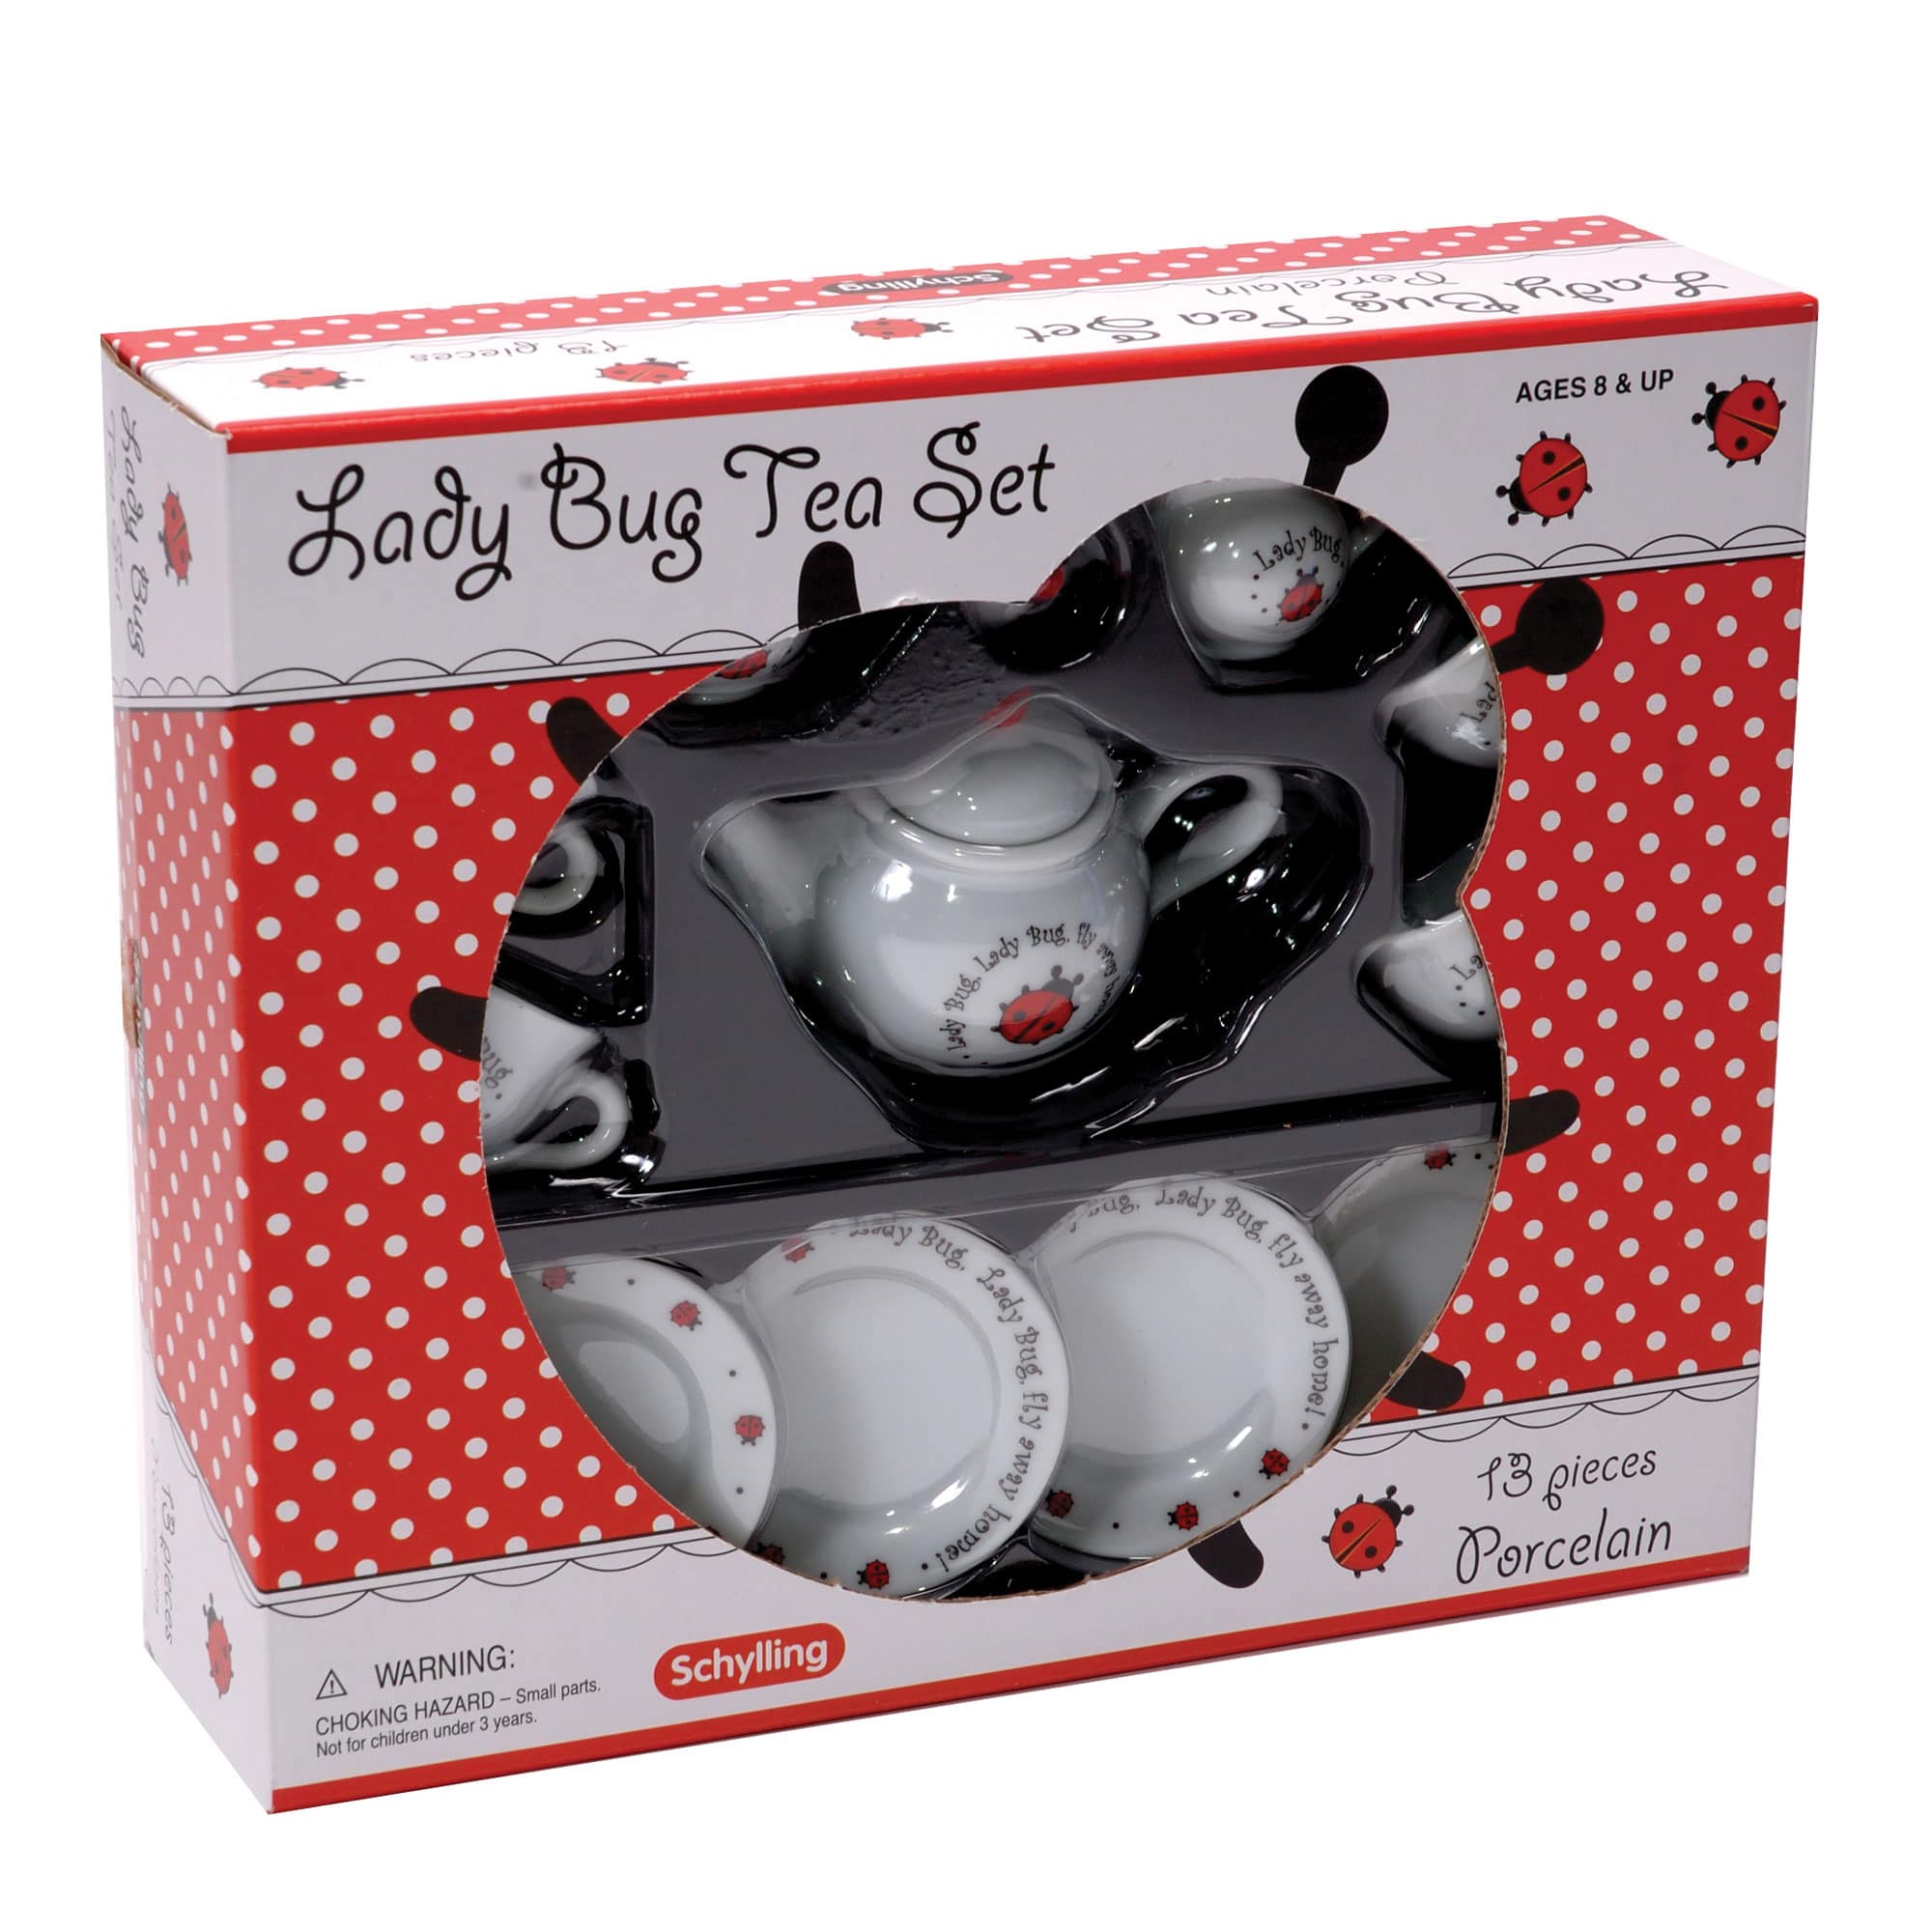 Ladybug Tea Set Kaboodles Toy Store - Victoria